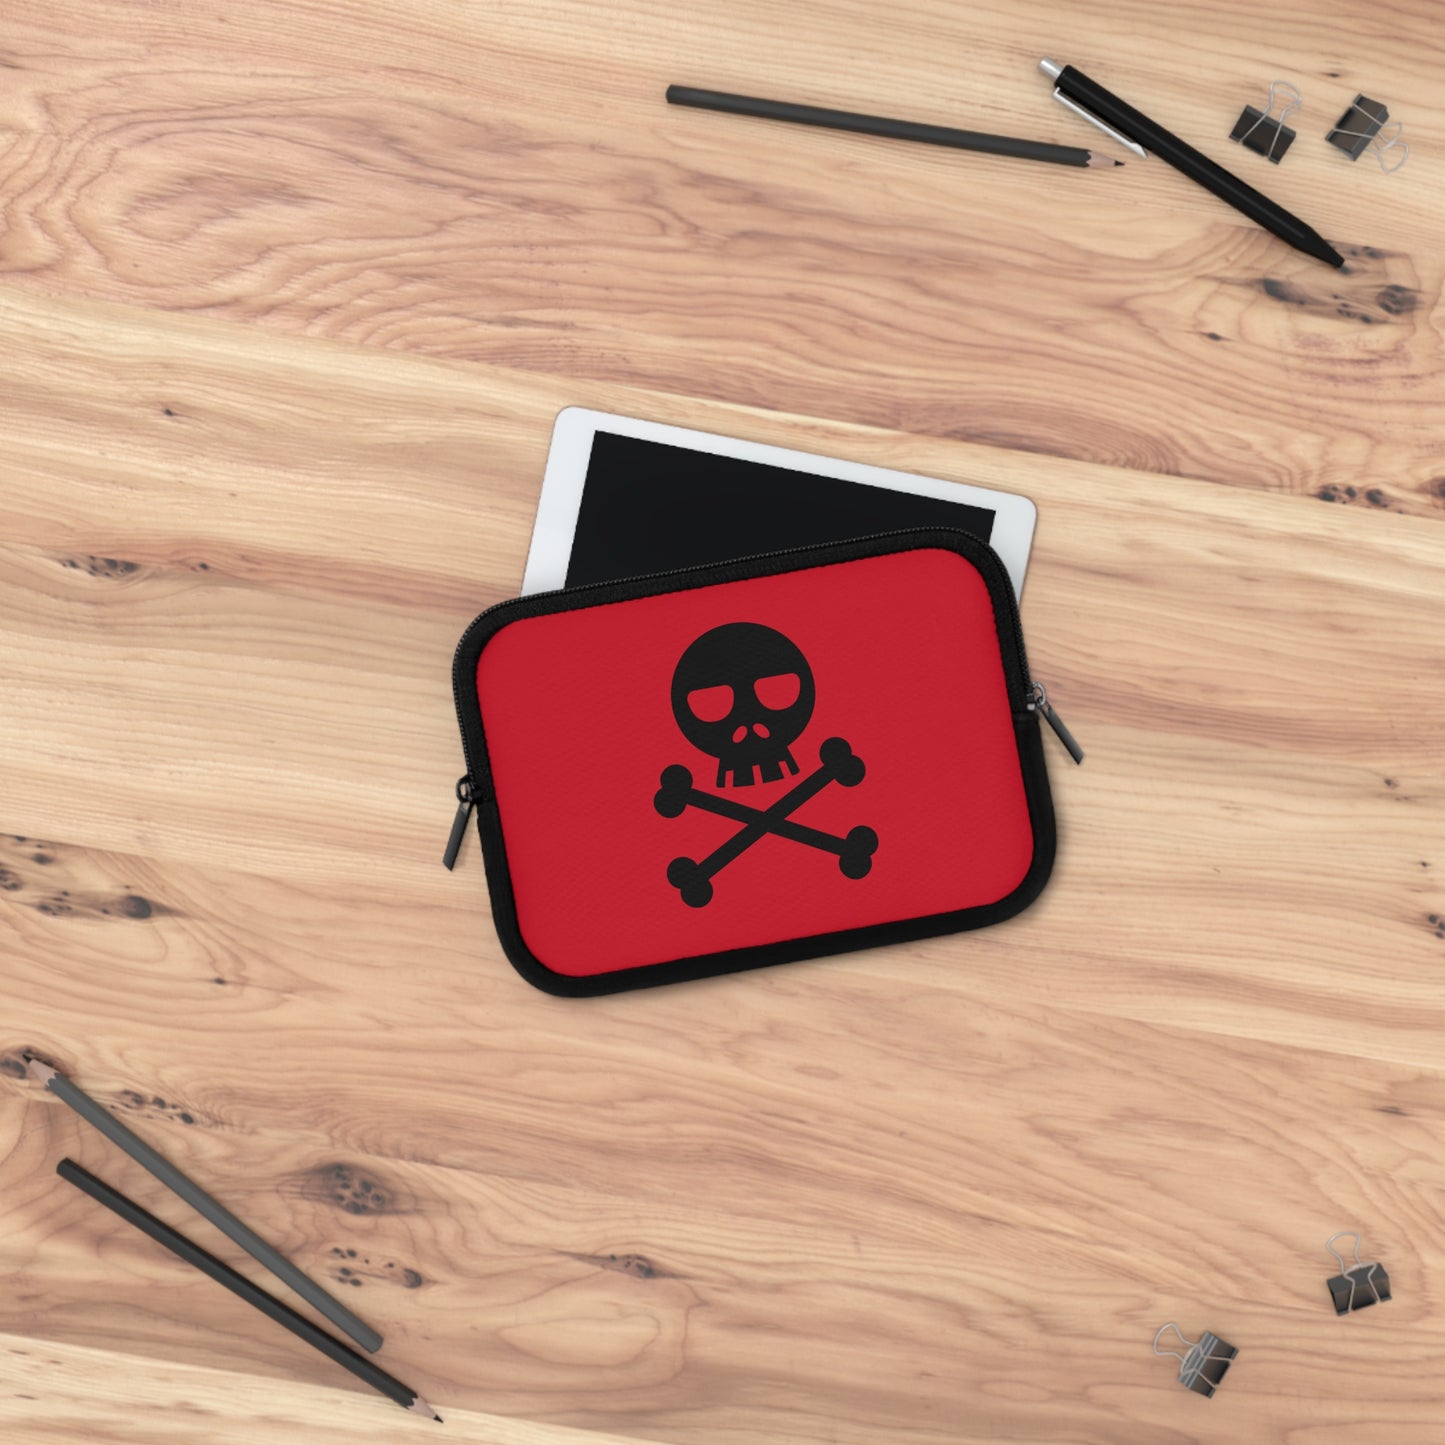 Red Skull and Crossbones Laptop Case, Punk laptop sleeve